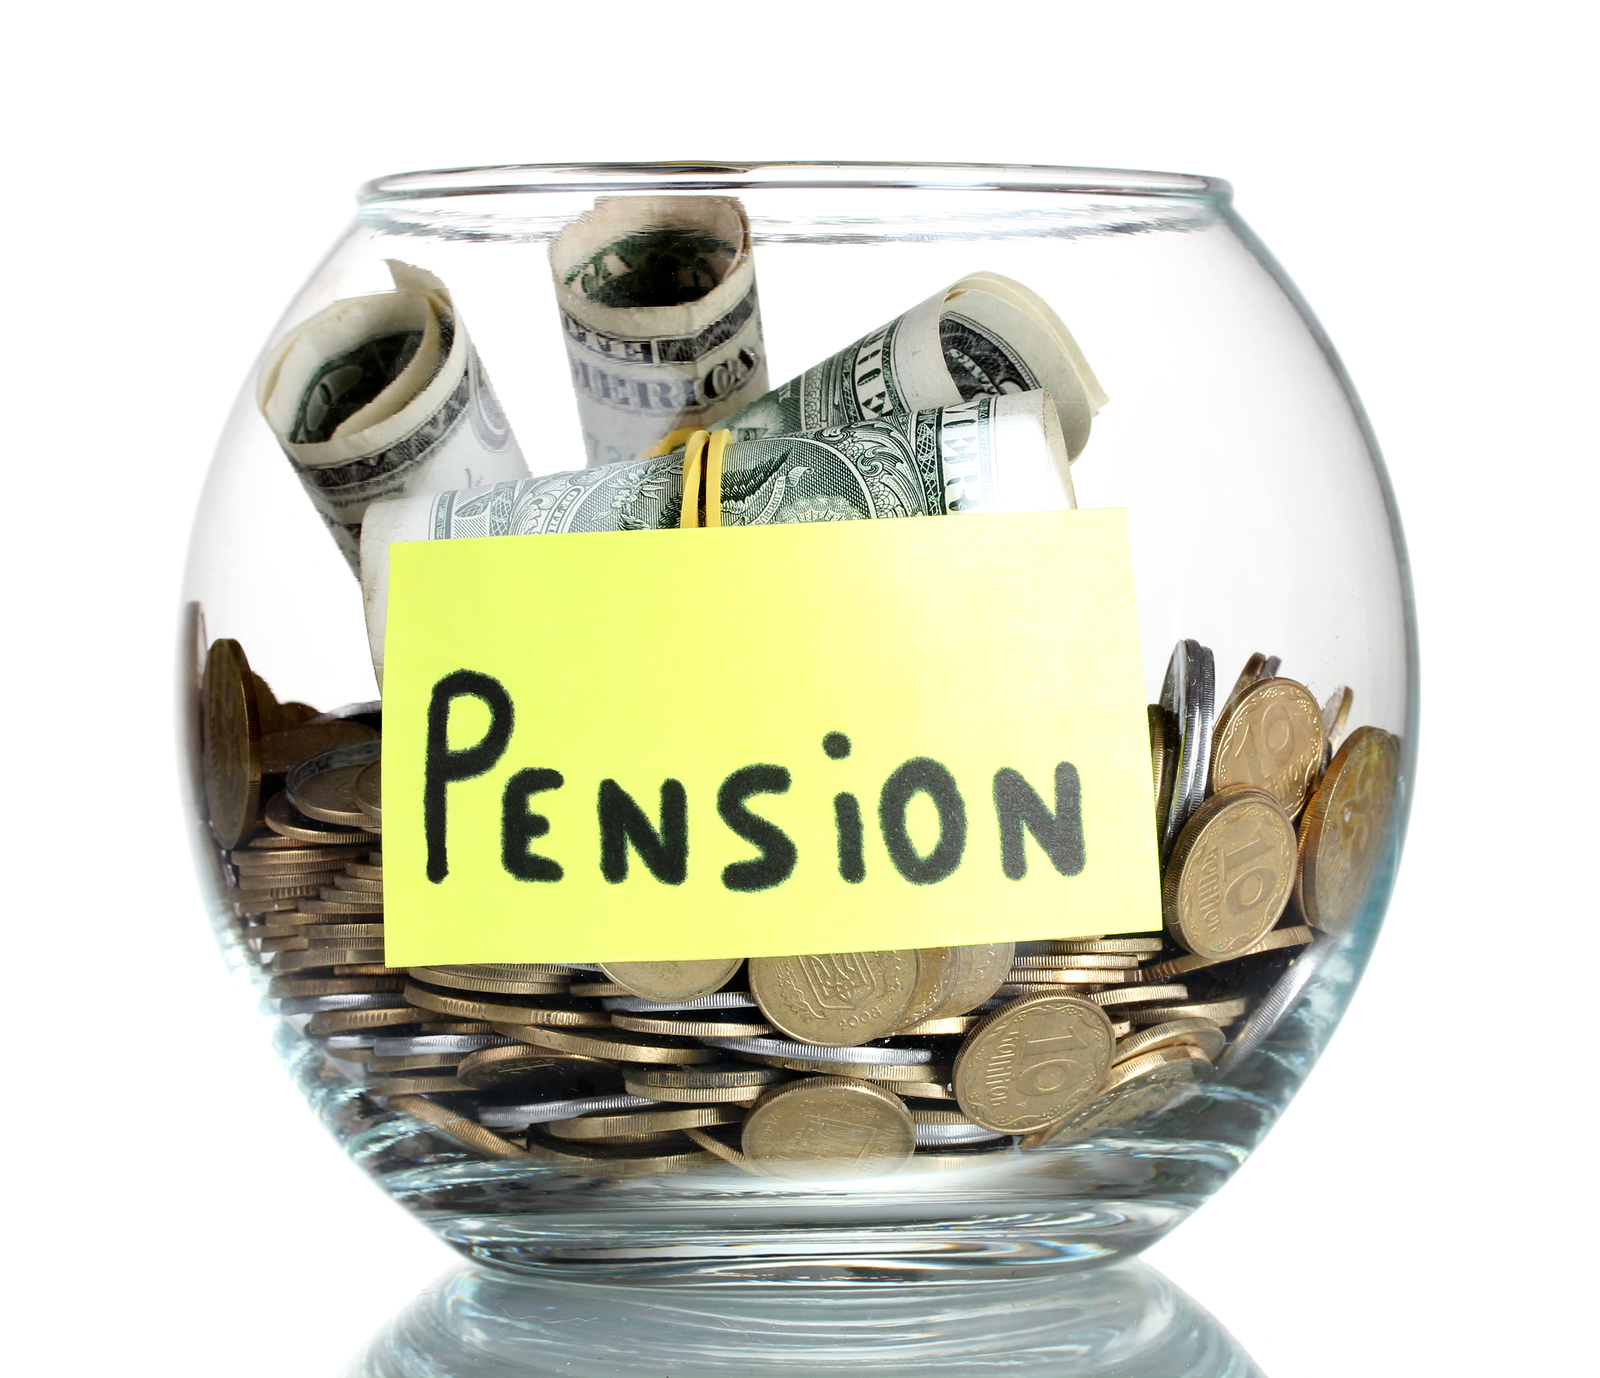 Pension (Foto vanguard news)